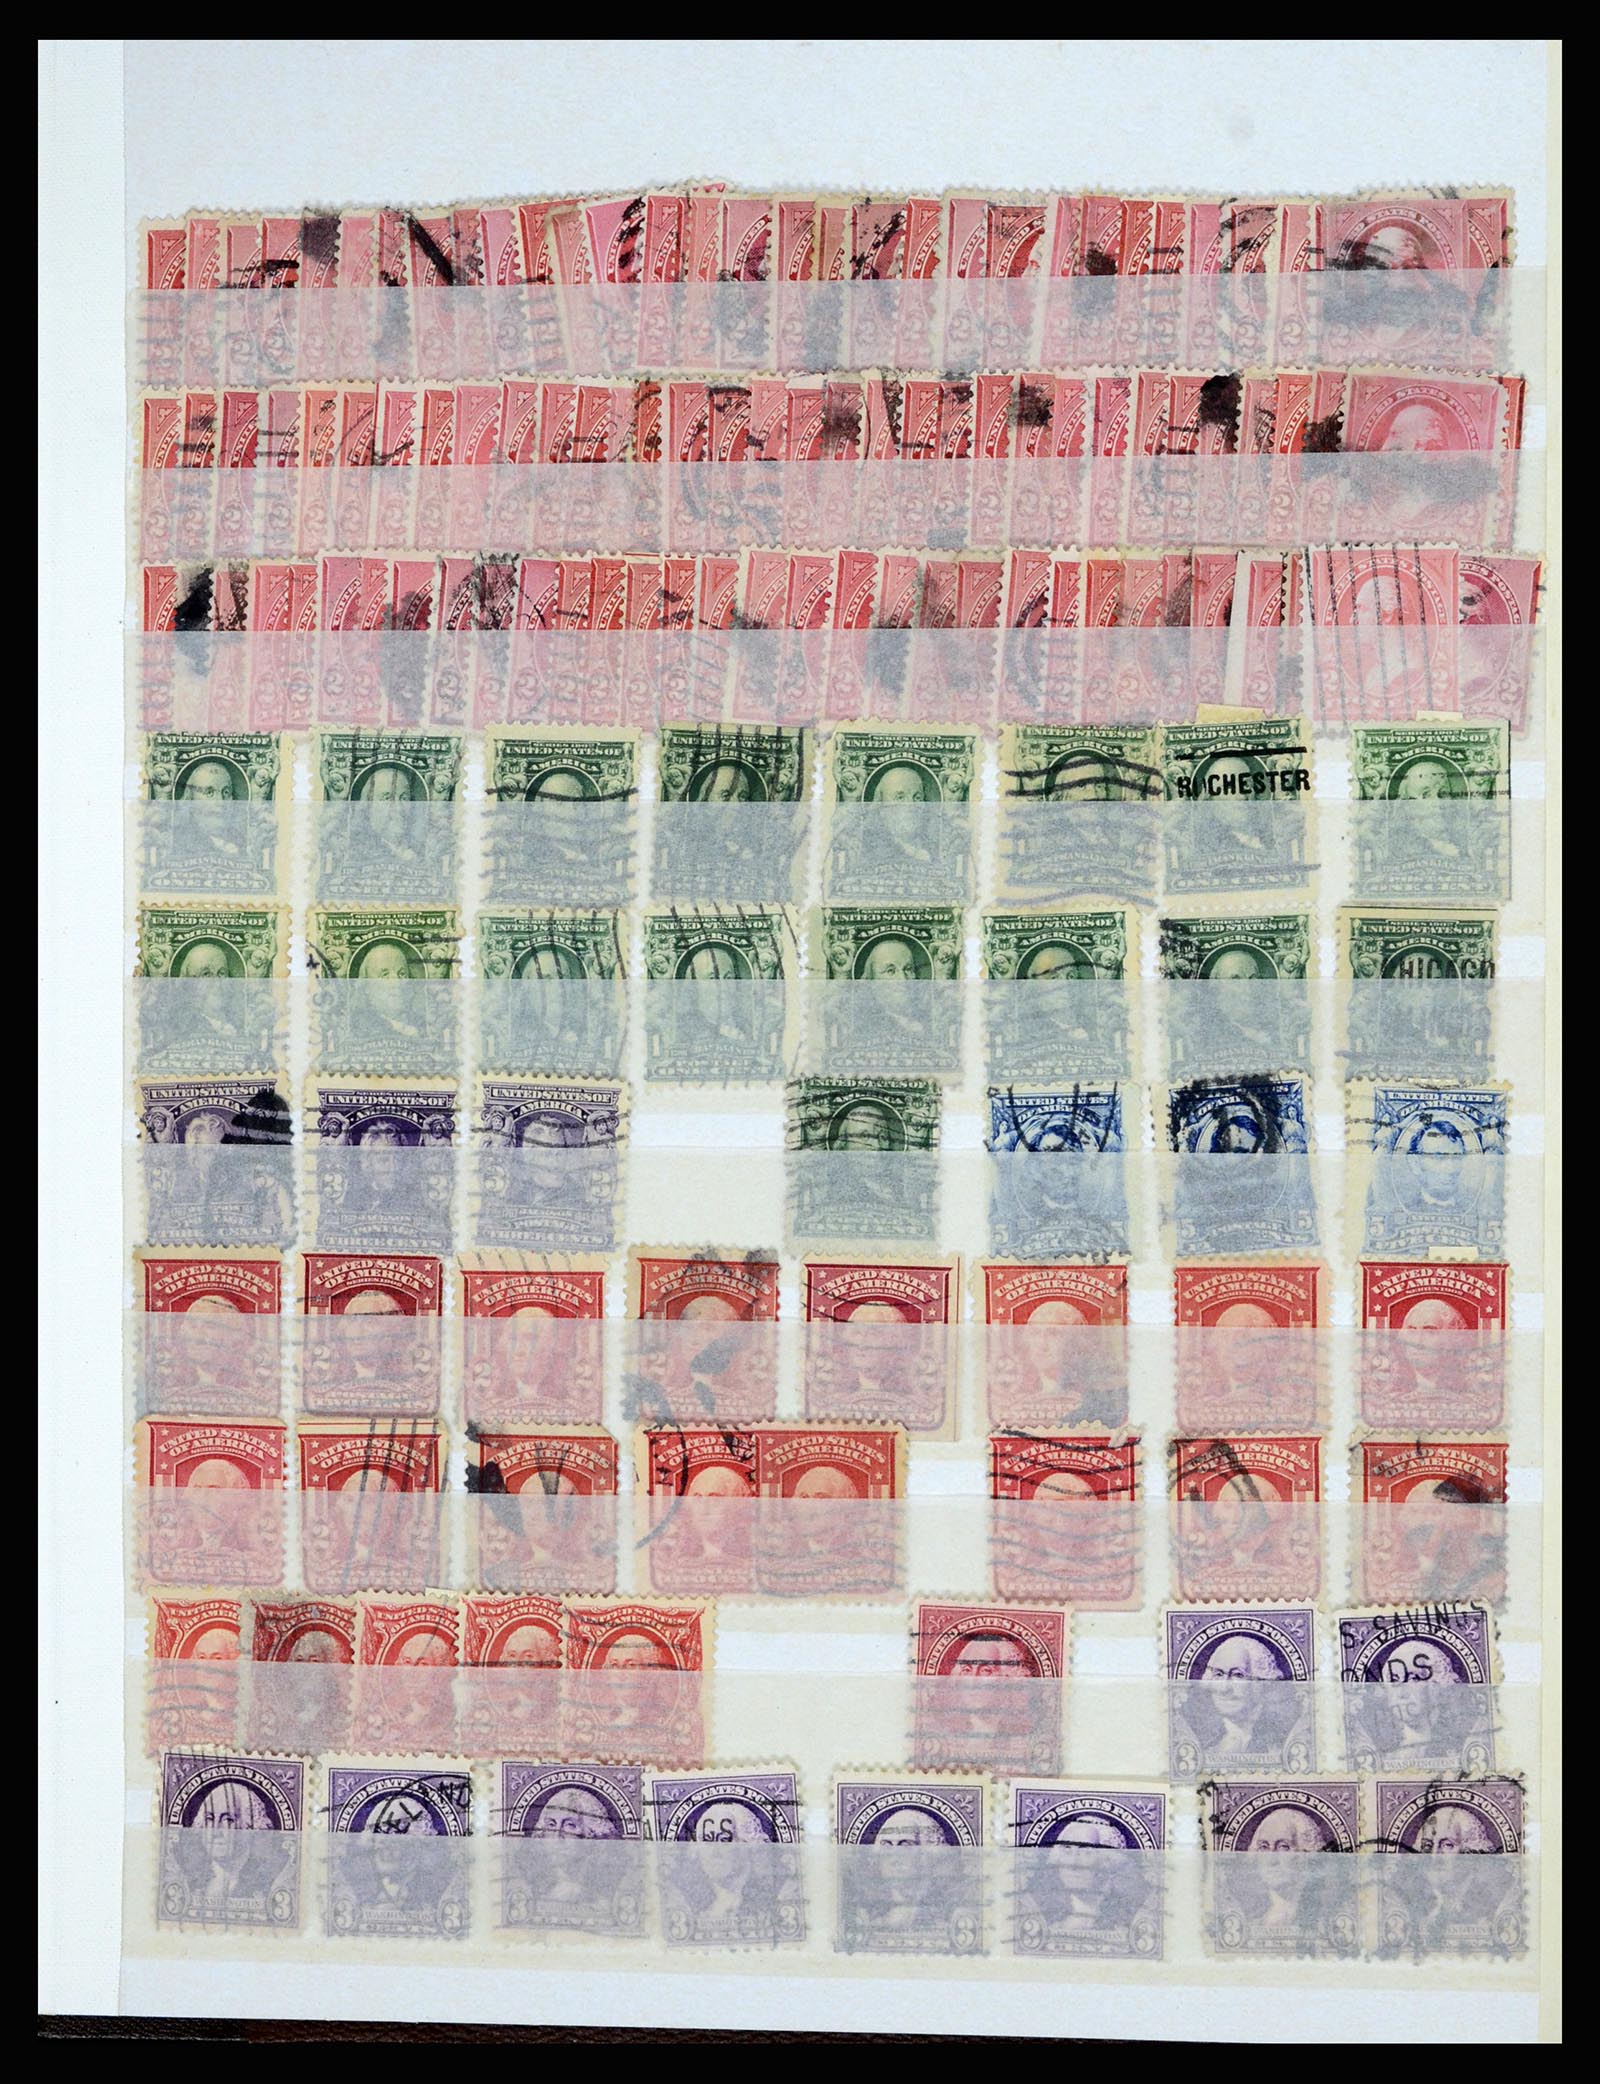 36866 085 - Stamp collection 36866 USA sorting lot.